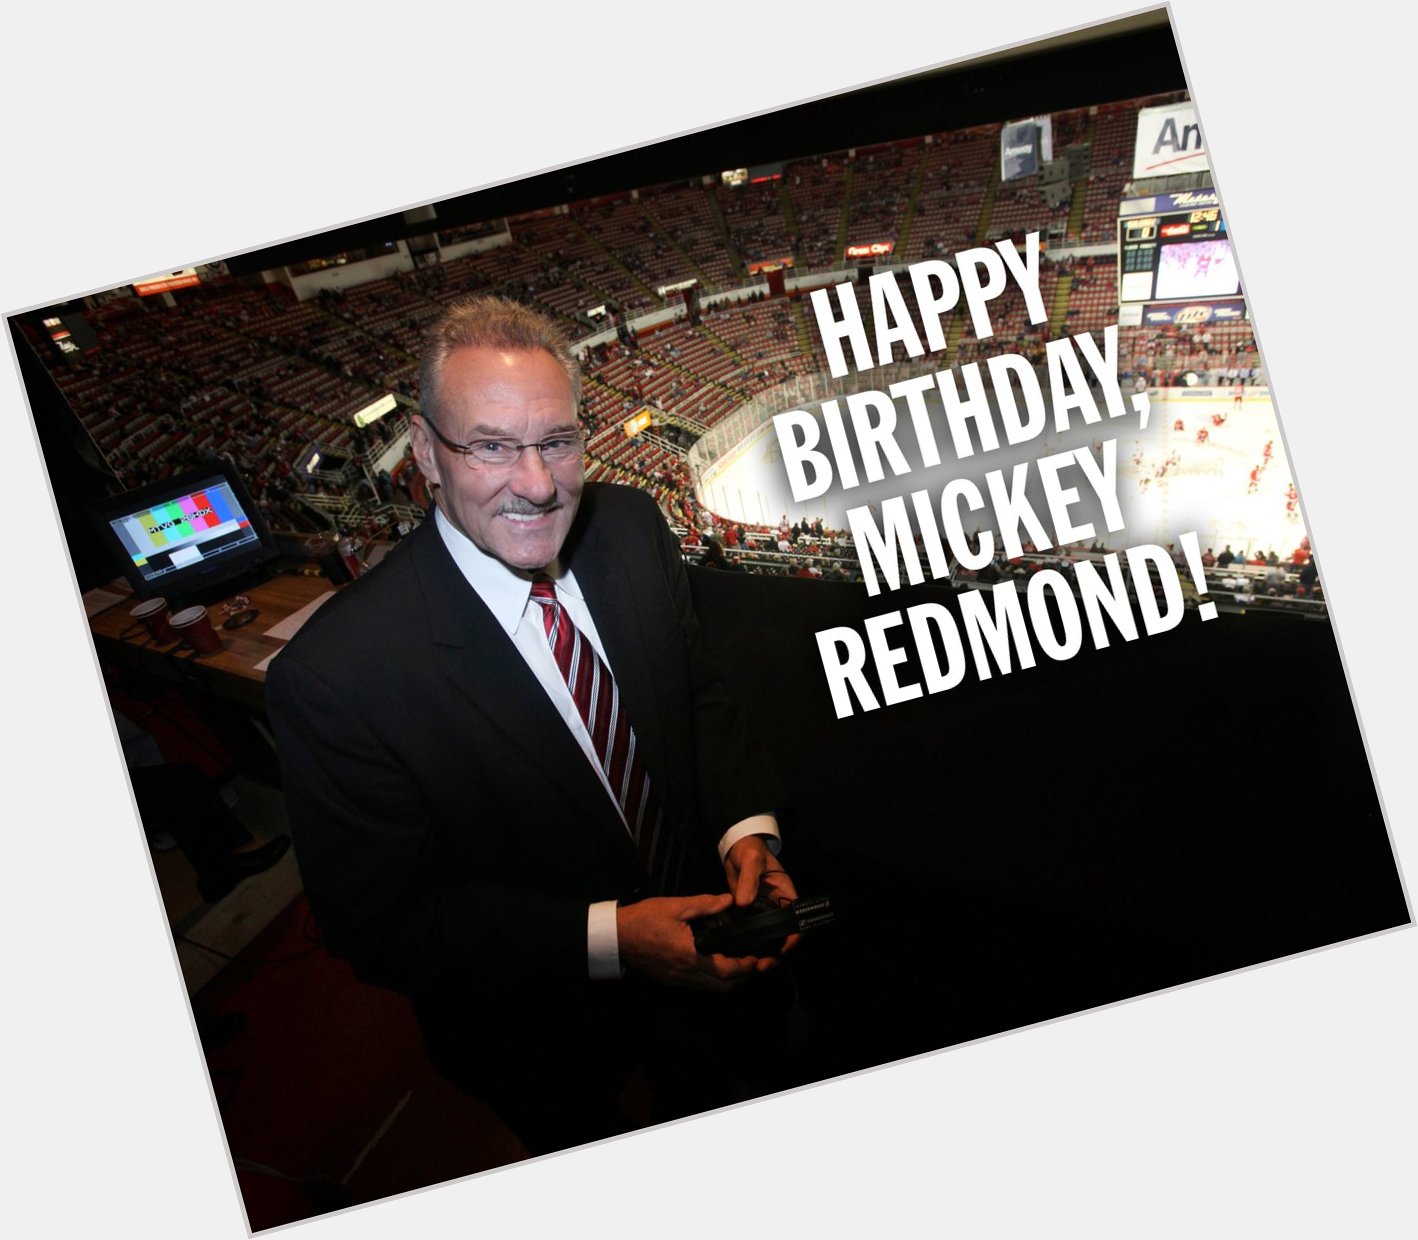 Happy birthday to former player Mickey Redmond! 